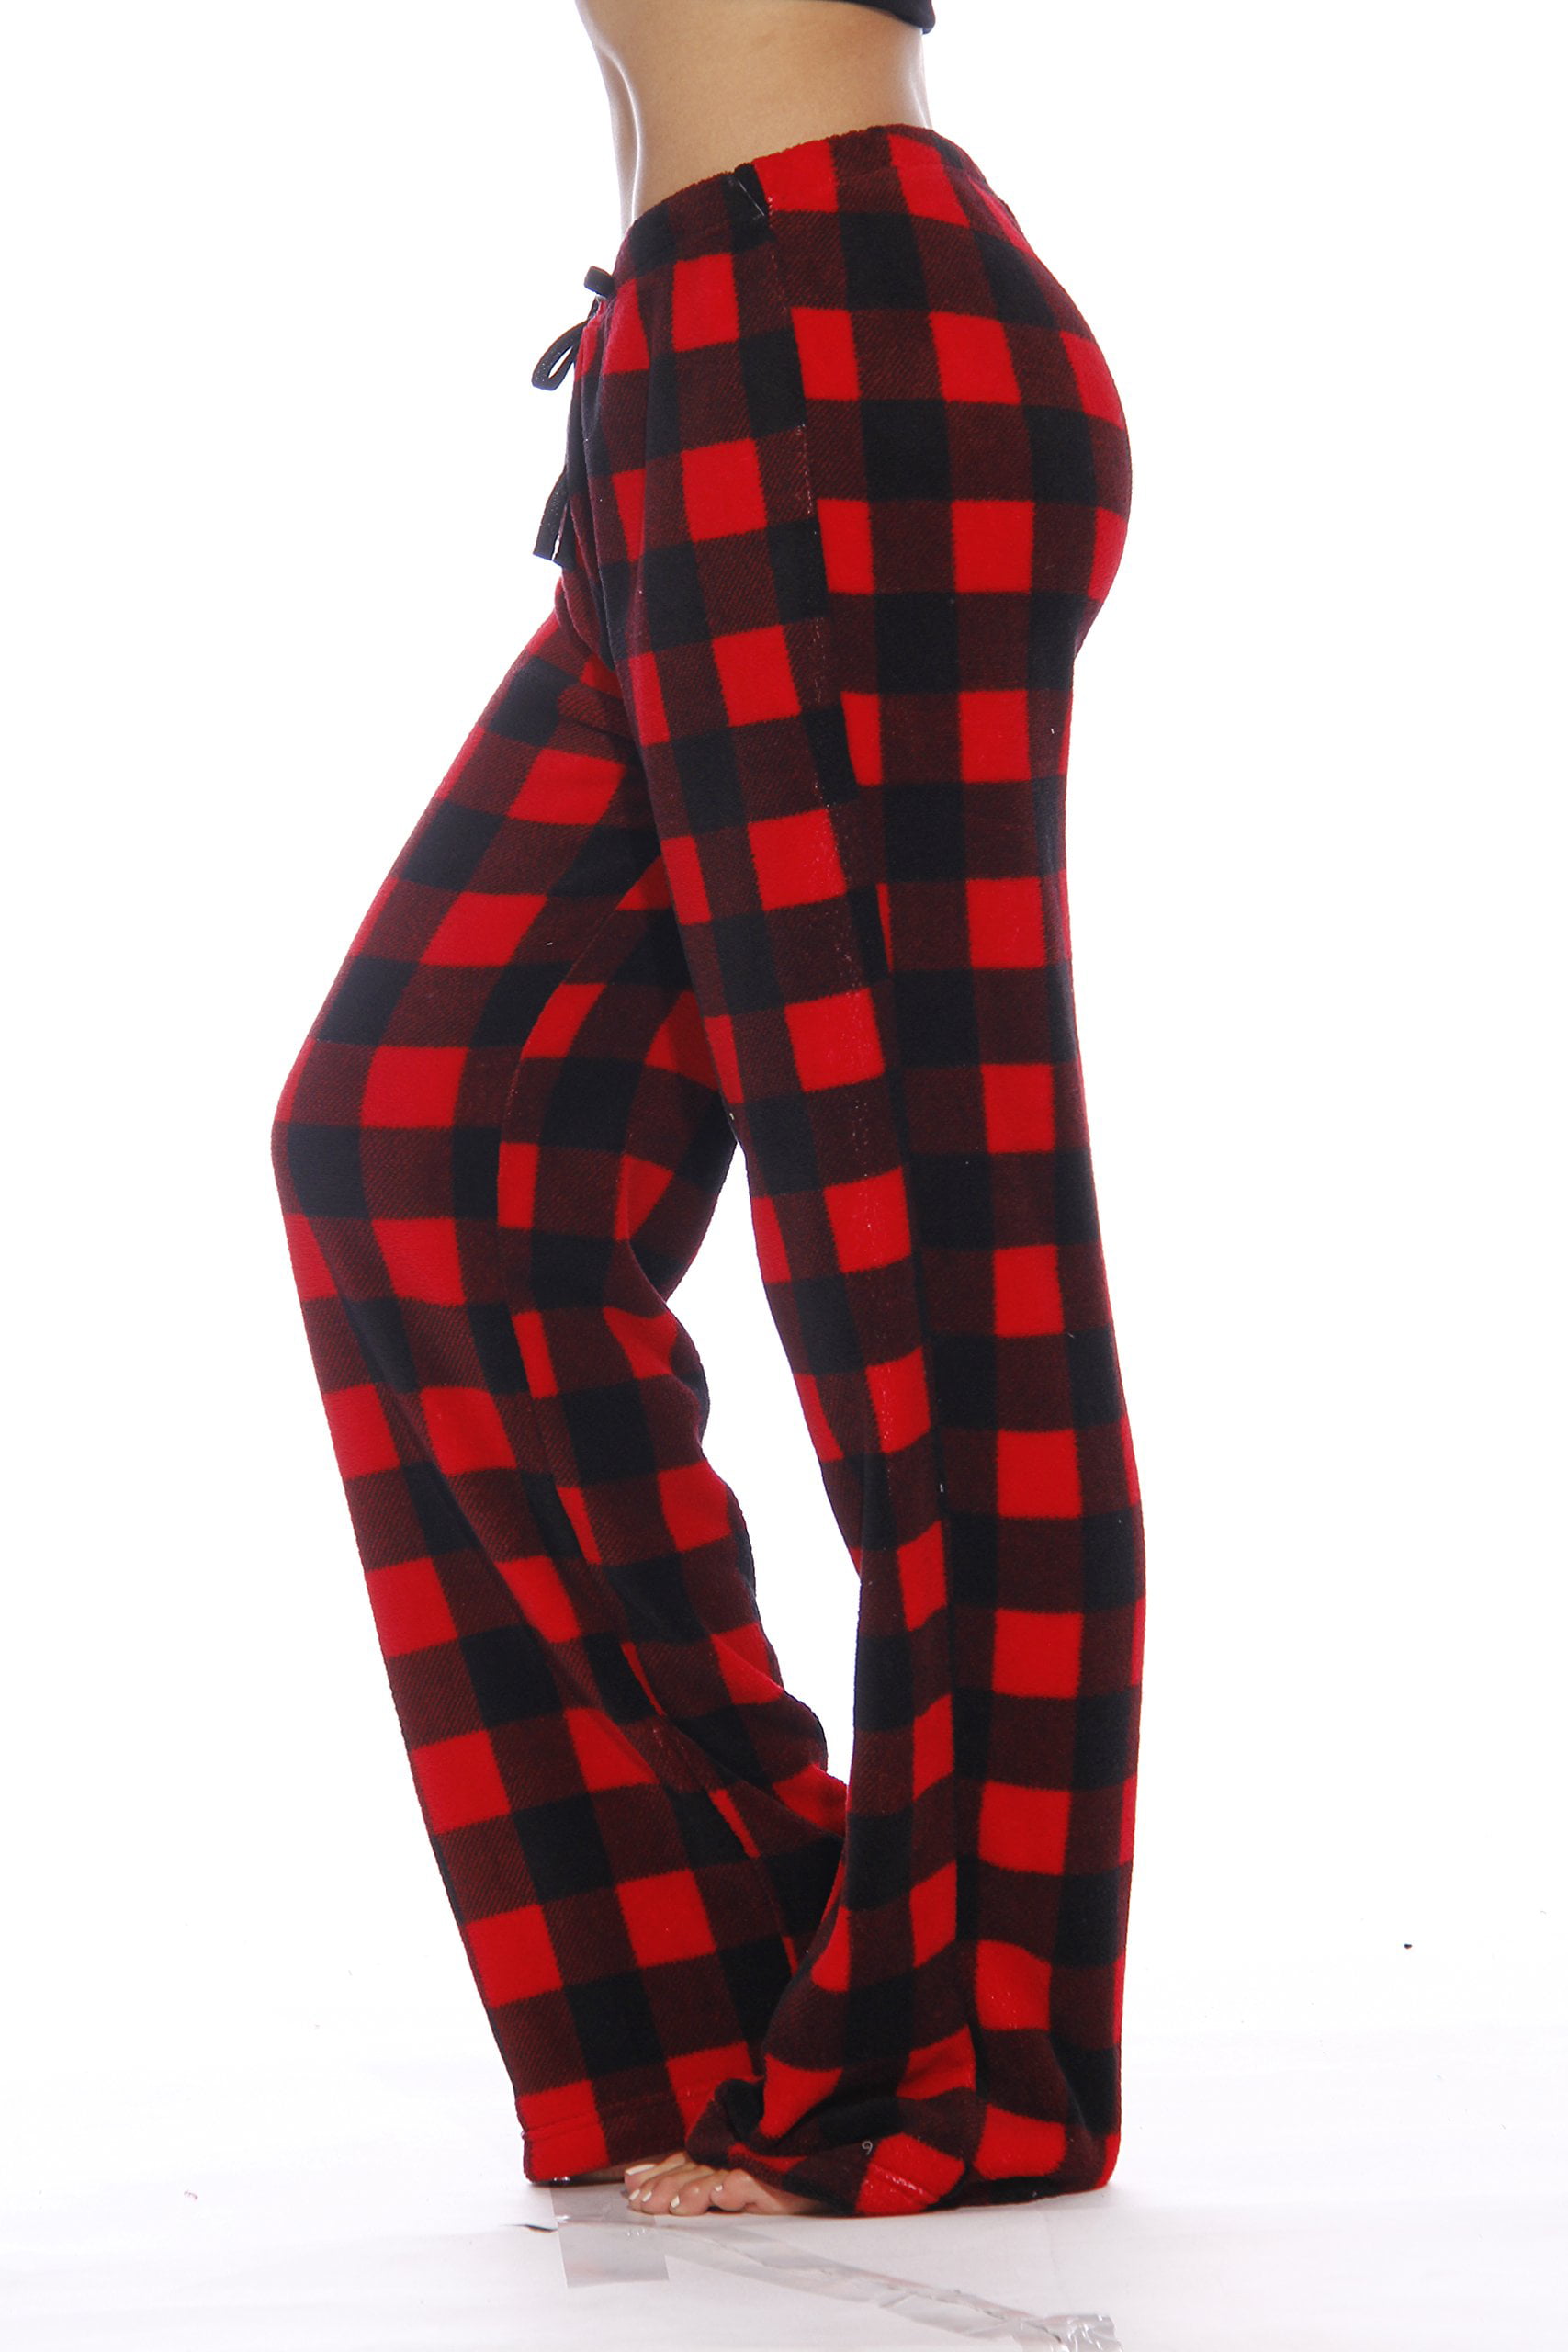 Just Love Women's Fleece Pajama Pants - Soft and Cozy Sleepwear Lounge PJs  (Buffalo Plaid Red, X-Large) 